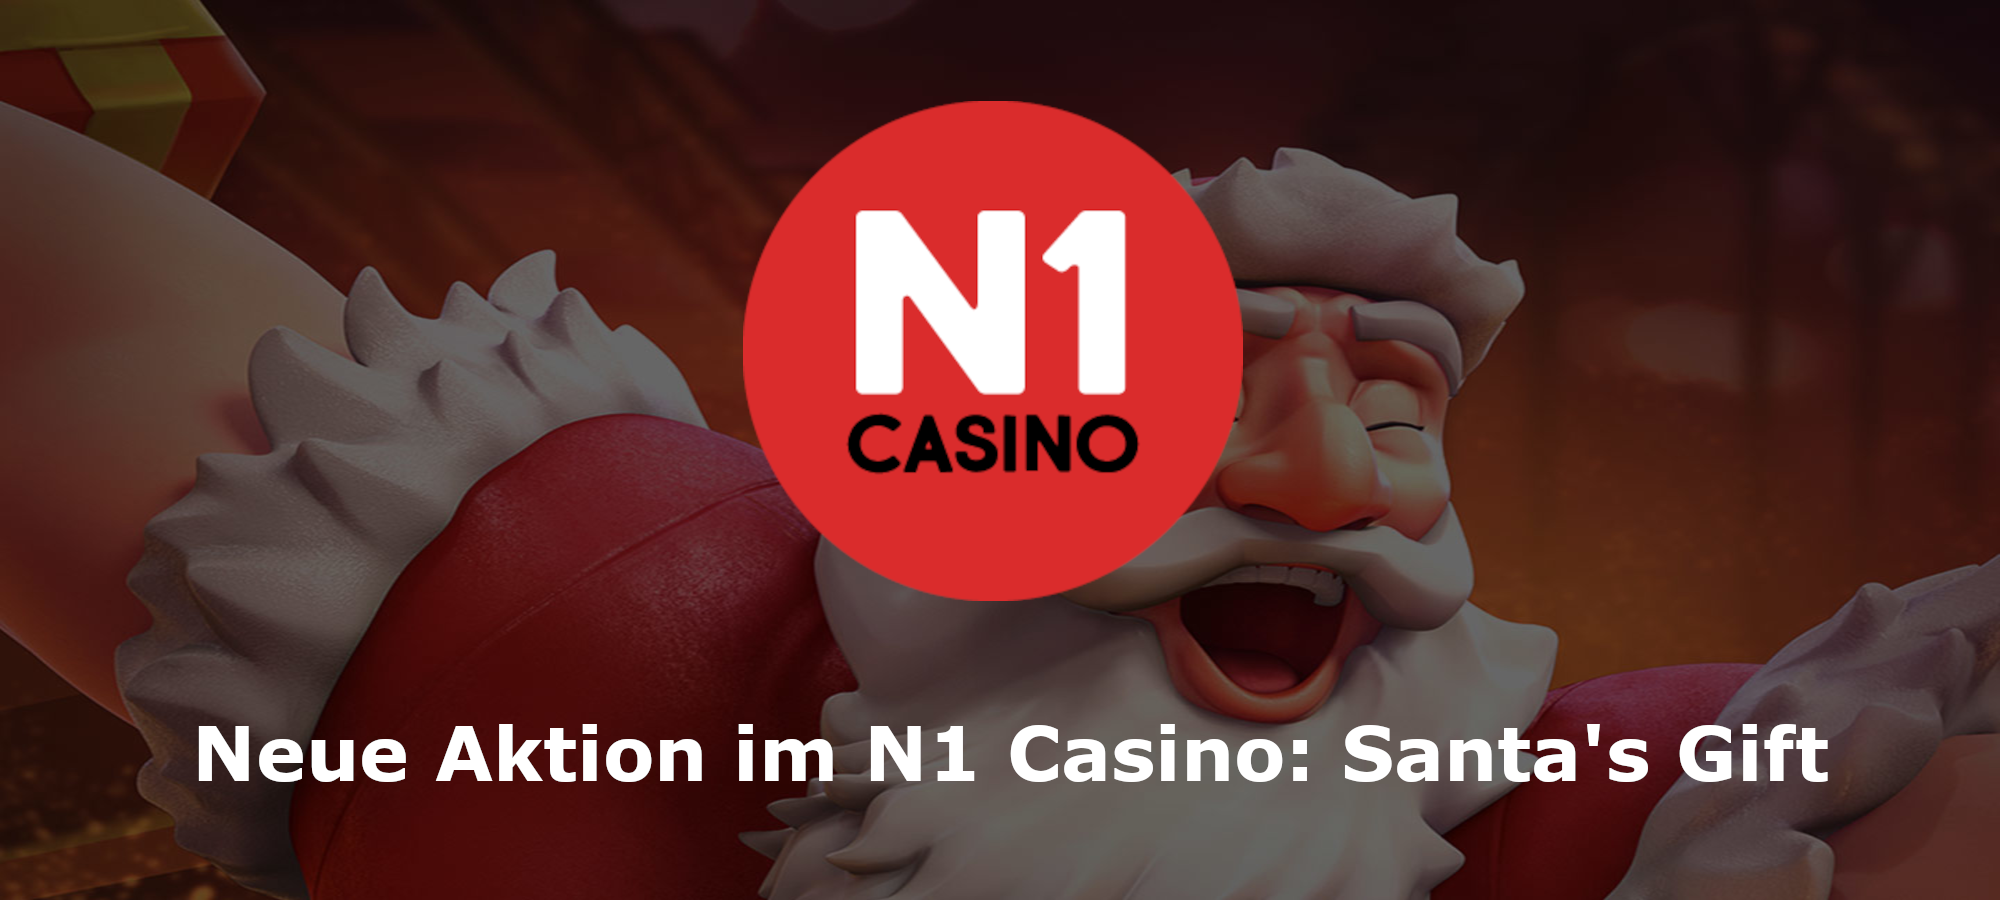 Neue Aktion im N1 Casino: Santa’s Gift